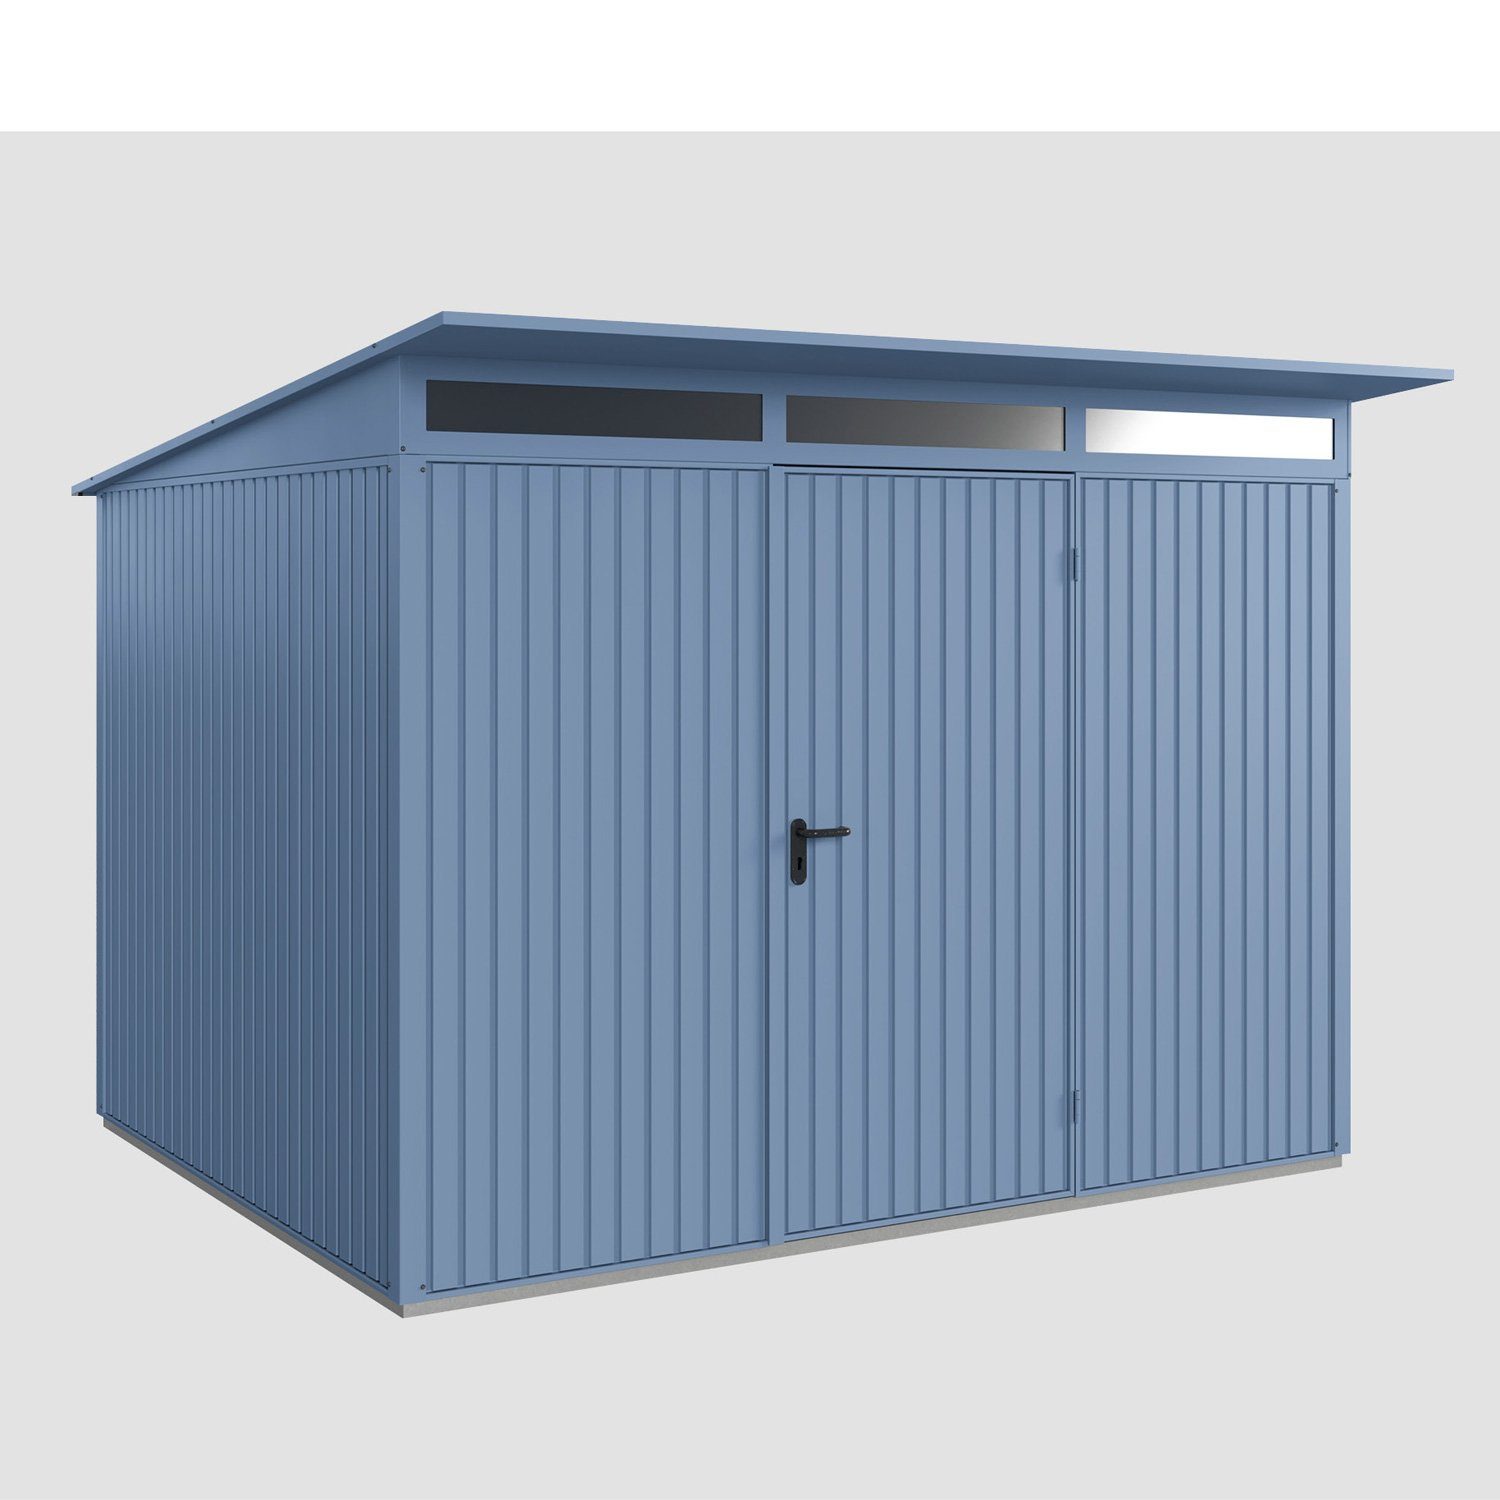 Hörmann Ecostar Gerätehaus Metall-Gerätehaus Trend mit Pultdach Typ 3, 1-flüglige Tür taubenblau